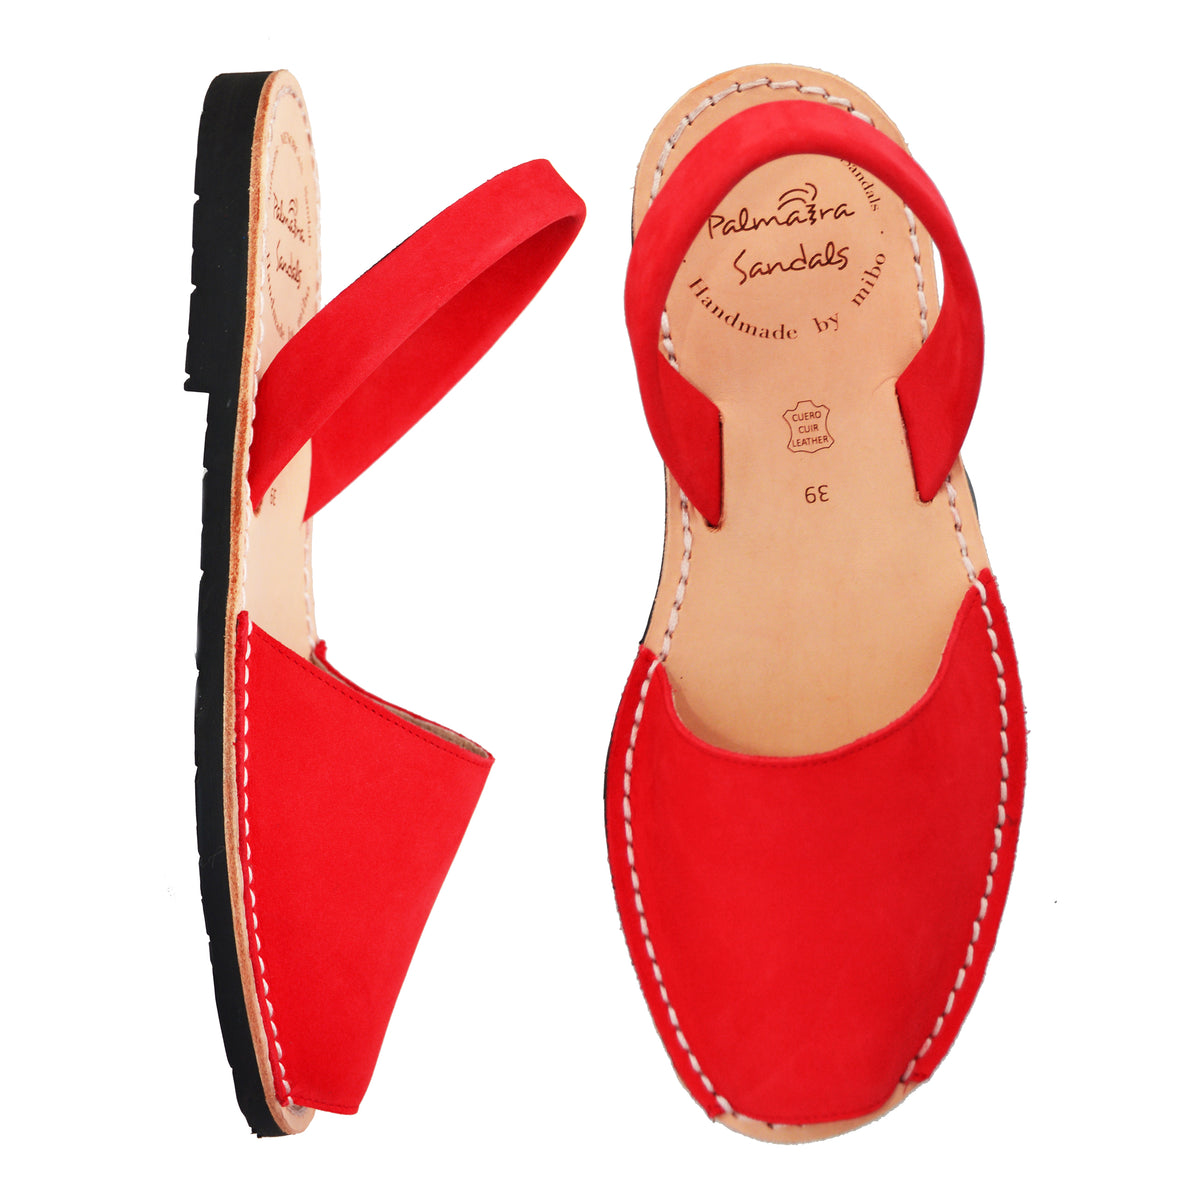 classic red nubuck leather spanish menorcan avarcas sandals